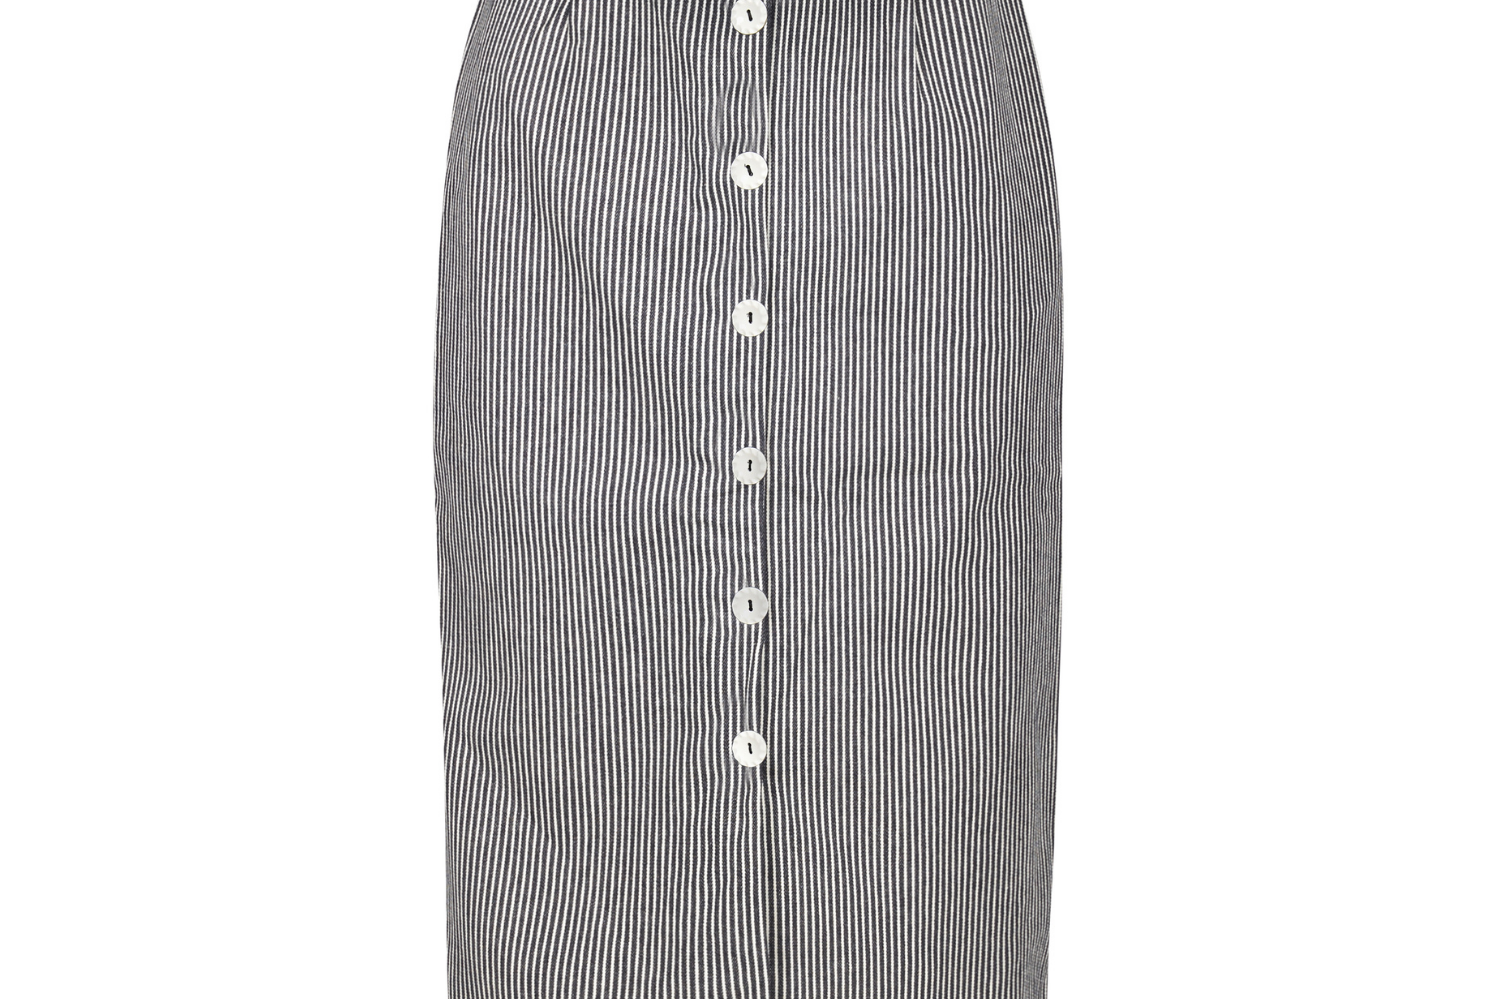 Florence Fluttering Skirt in Black & White Stripes OFFER: GET TOP FREE WHEN YOU BUY SKIRT